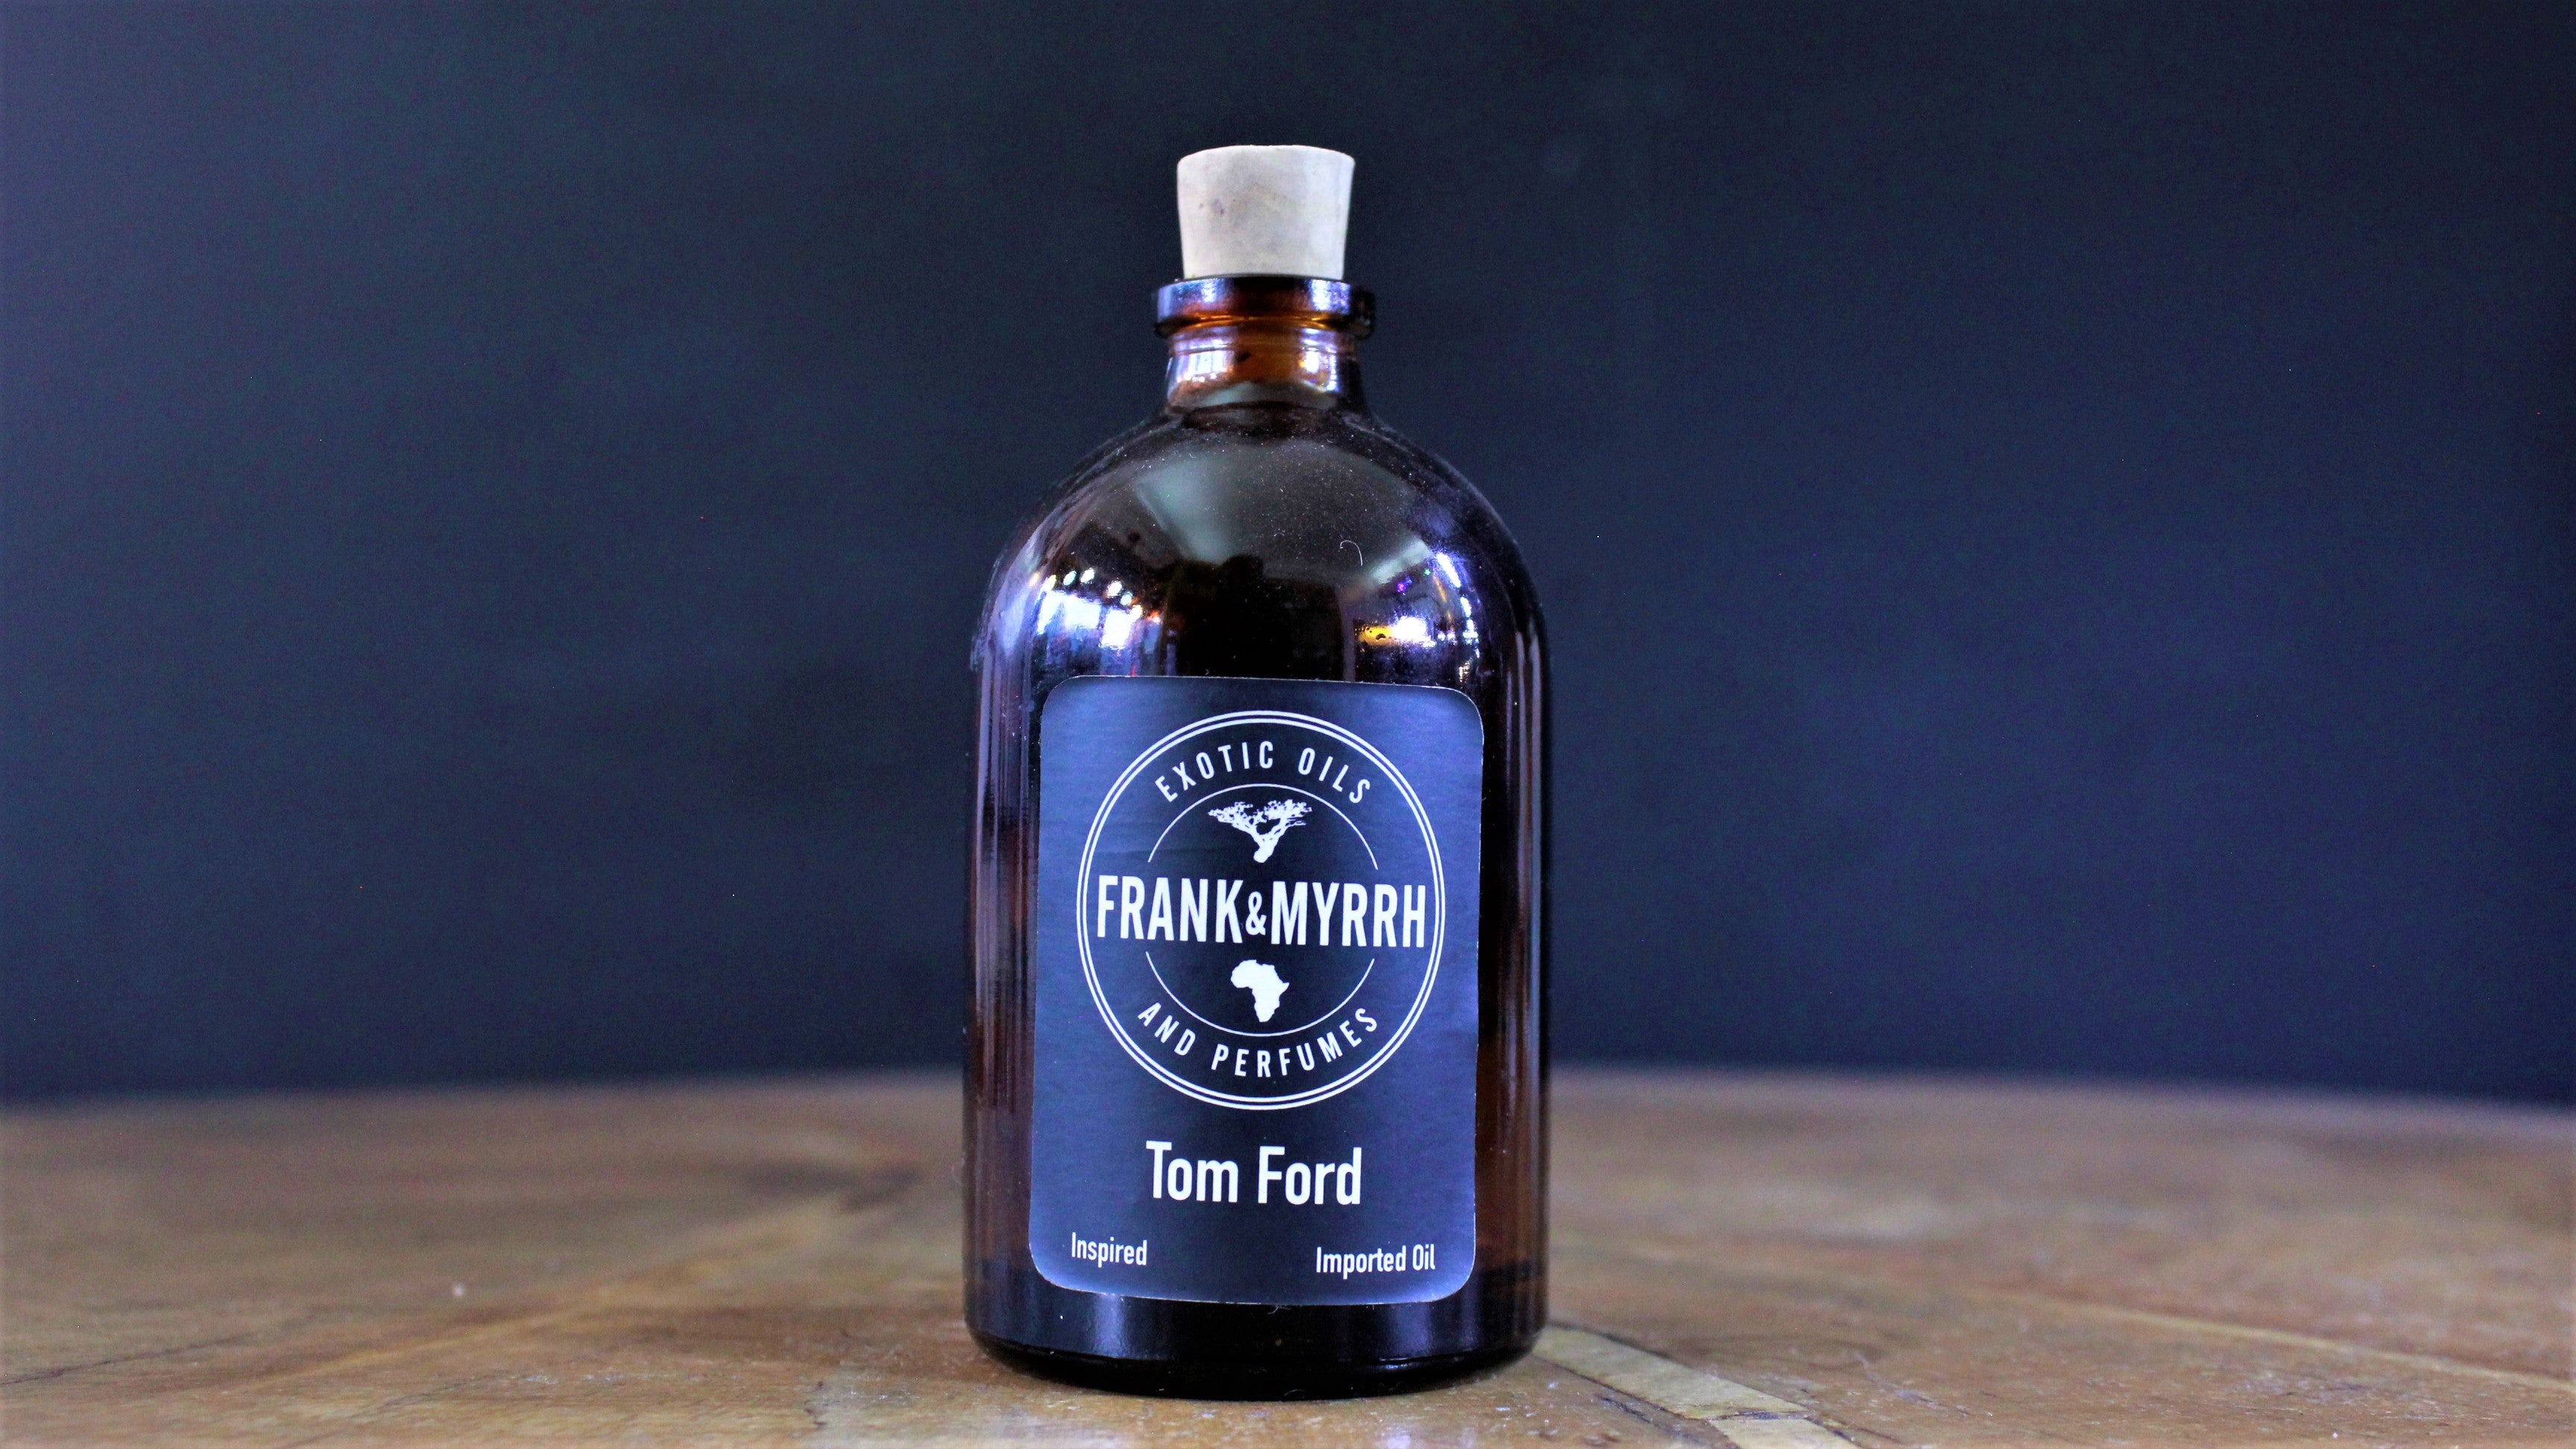 Tom Ford inspired – Frank And Myrrh